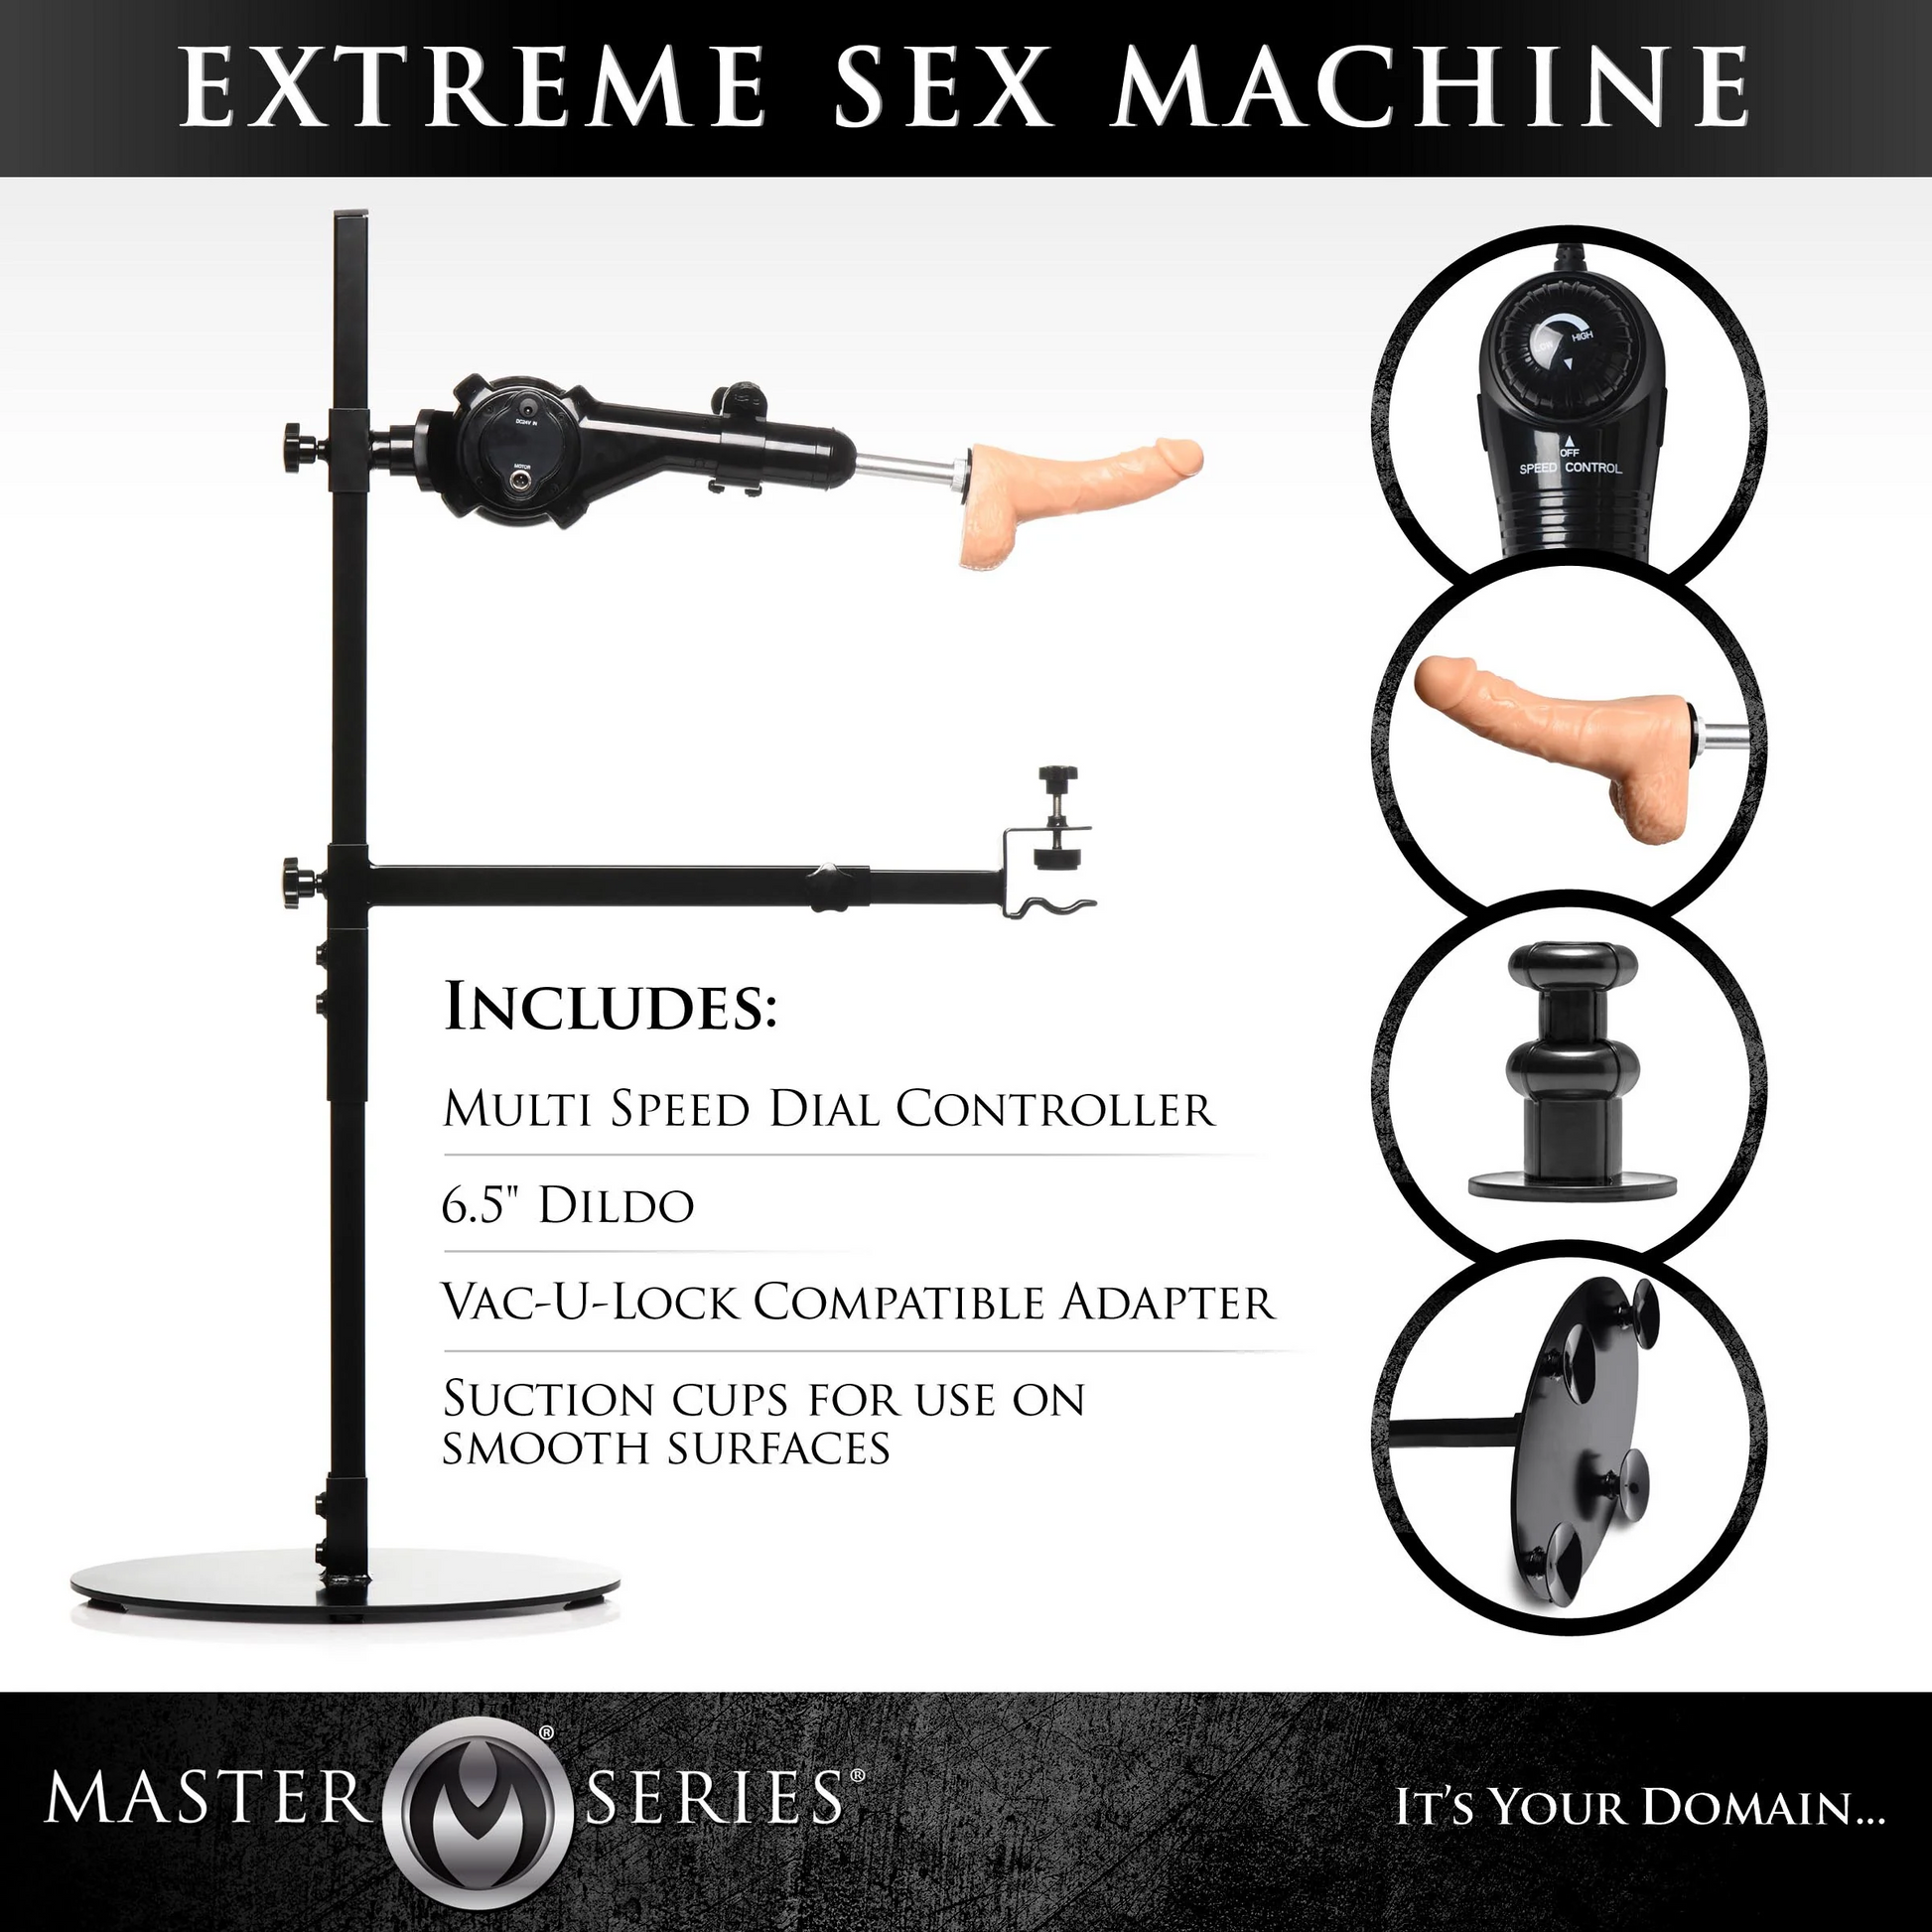 Master Series The Dicktator 2.0 Extreme Sex Machine - XOXTOYS